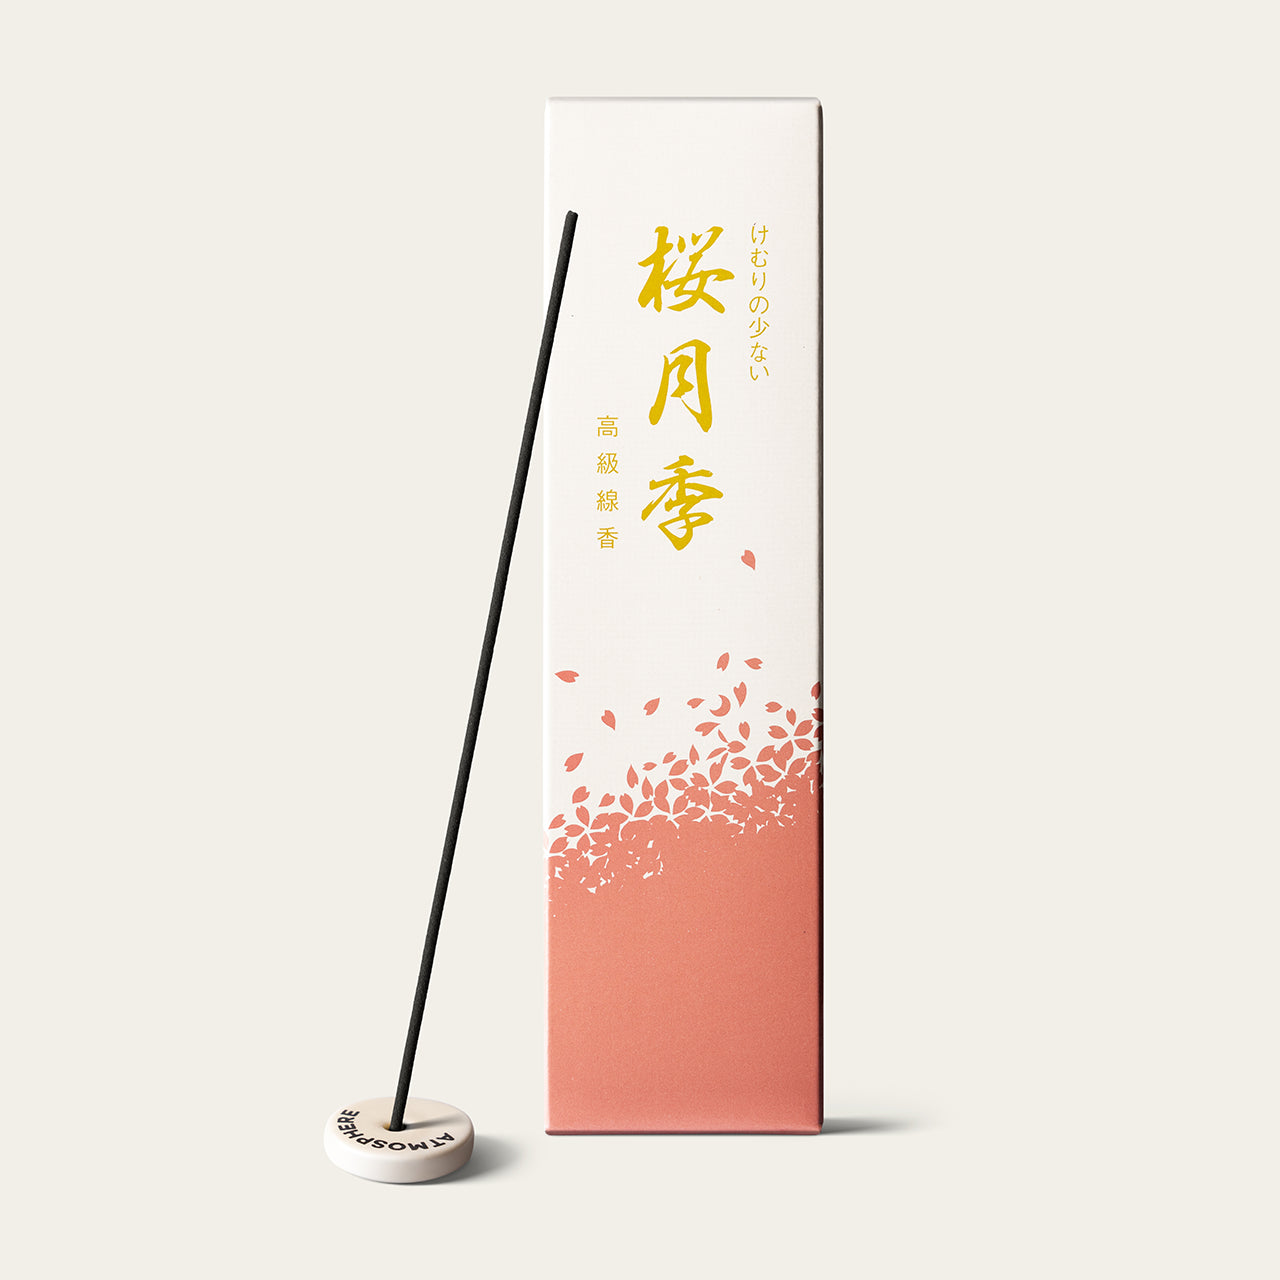 Gyokushodo Ougetsuki Moonflower Japanese incense sticks (25 sticks) with Atmosphere ceramic incense holder